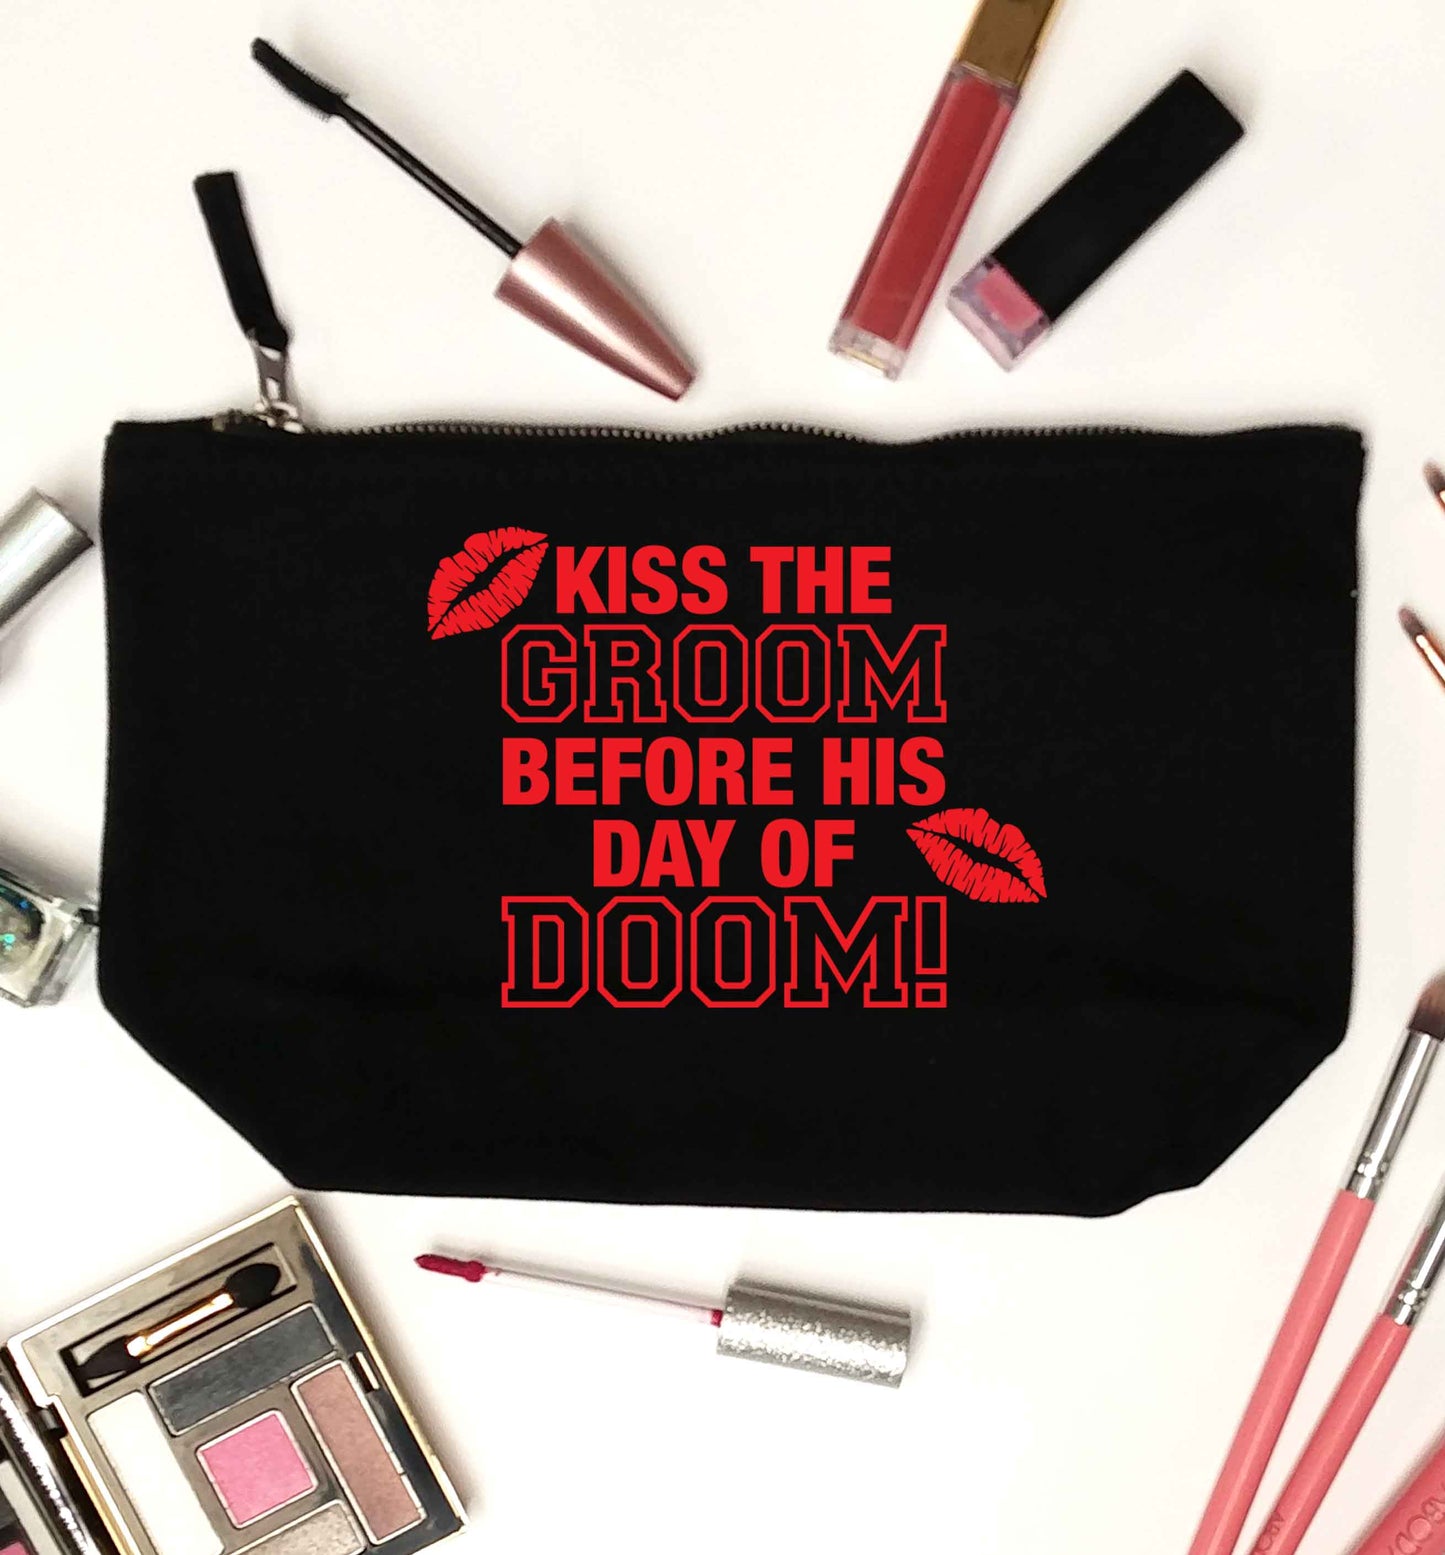 Kiss the groom before his day of doom! black makeup bag